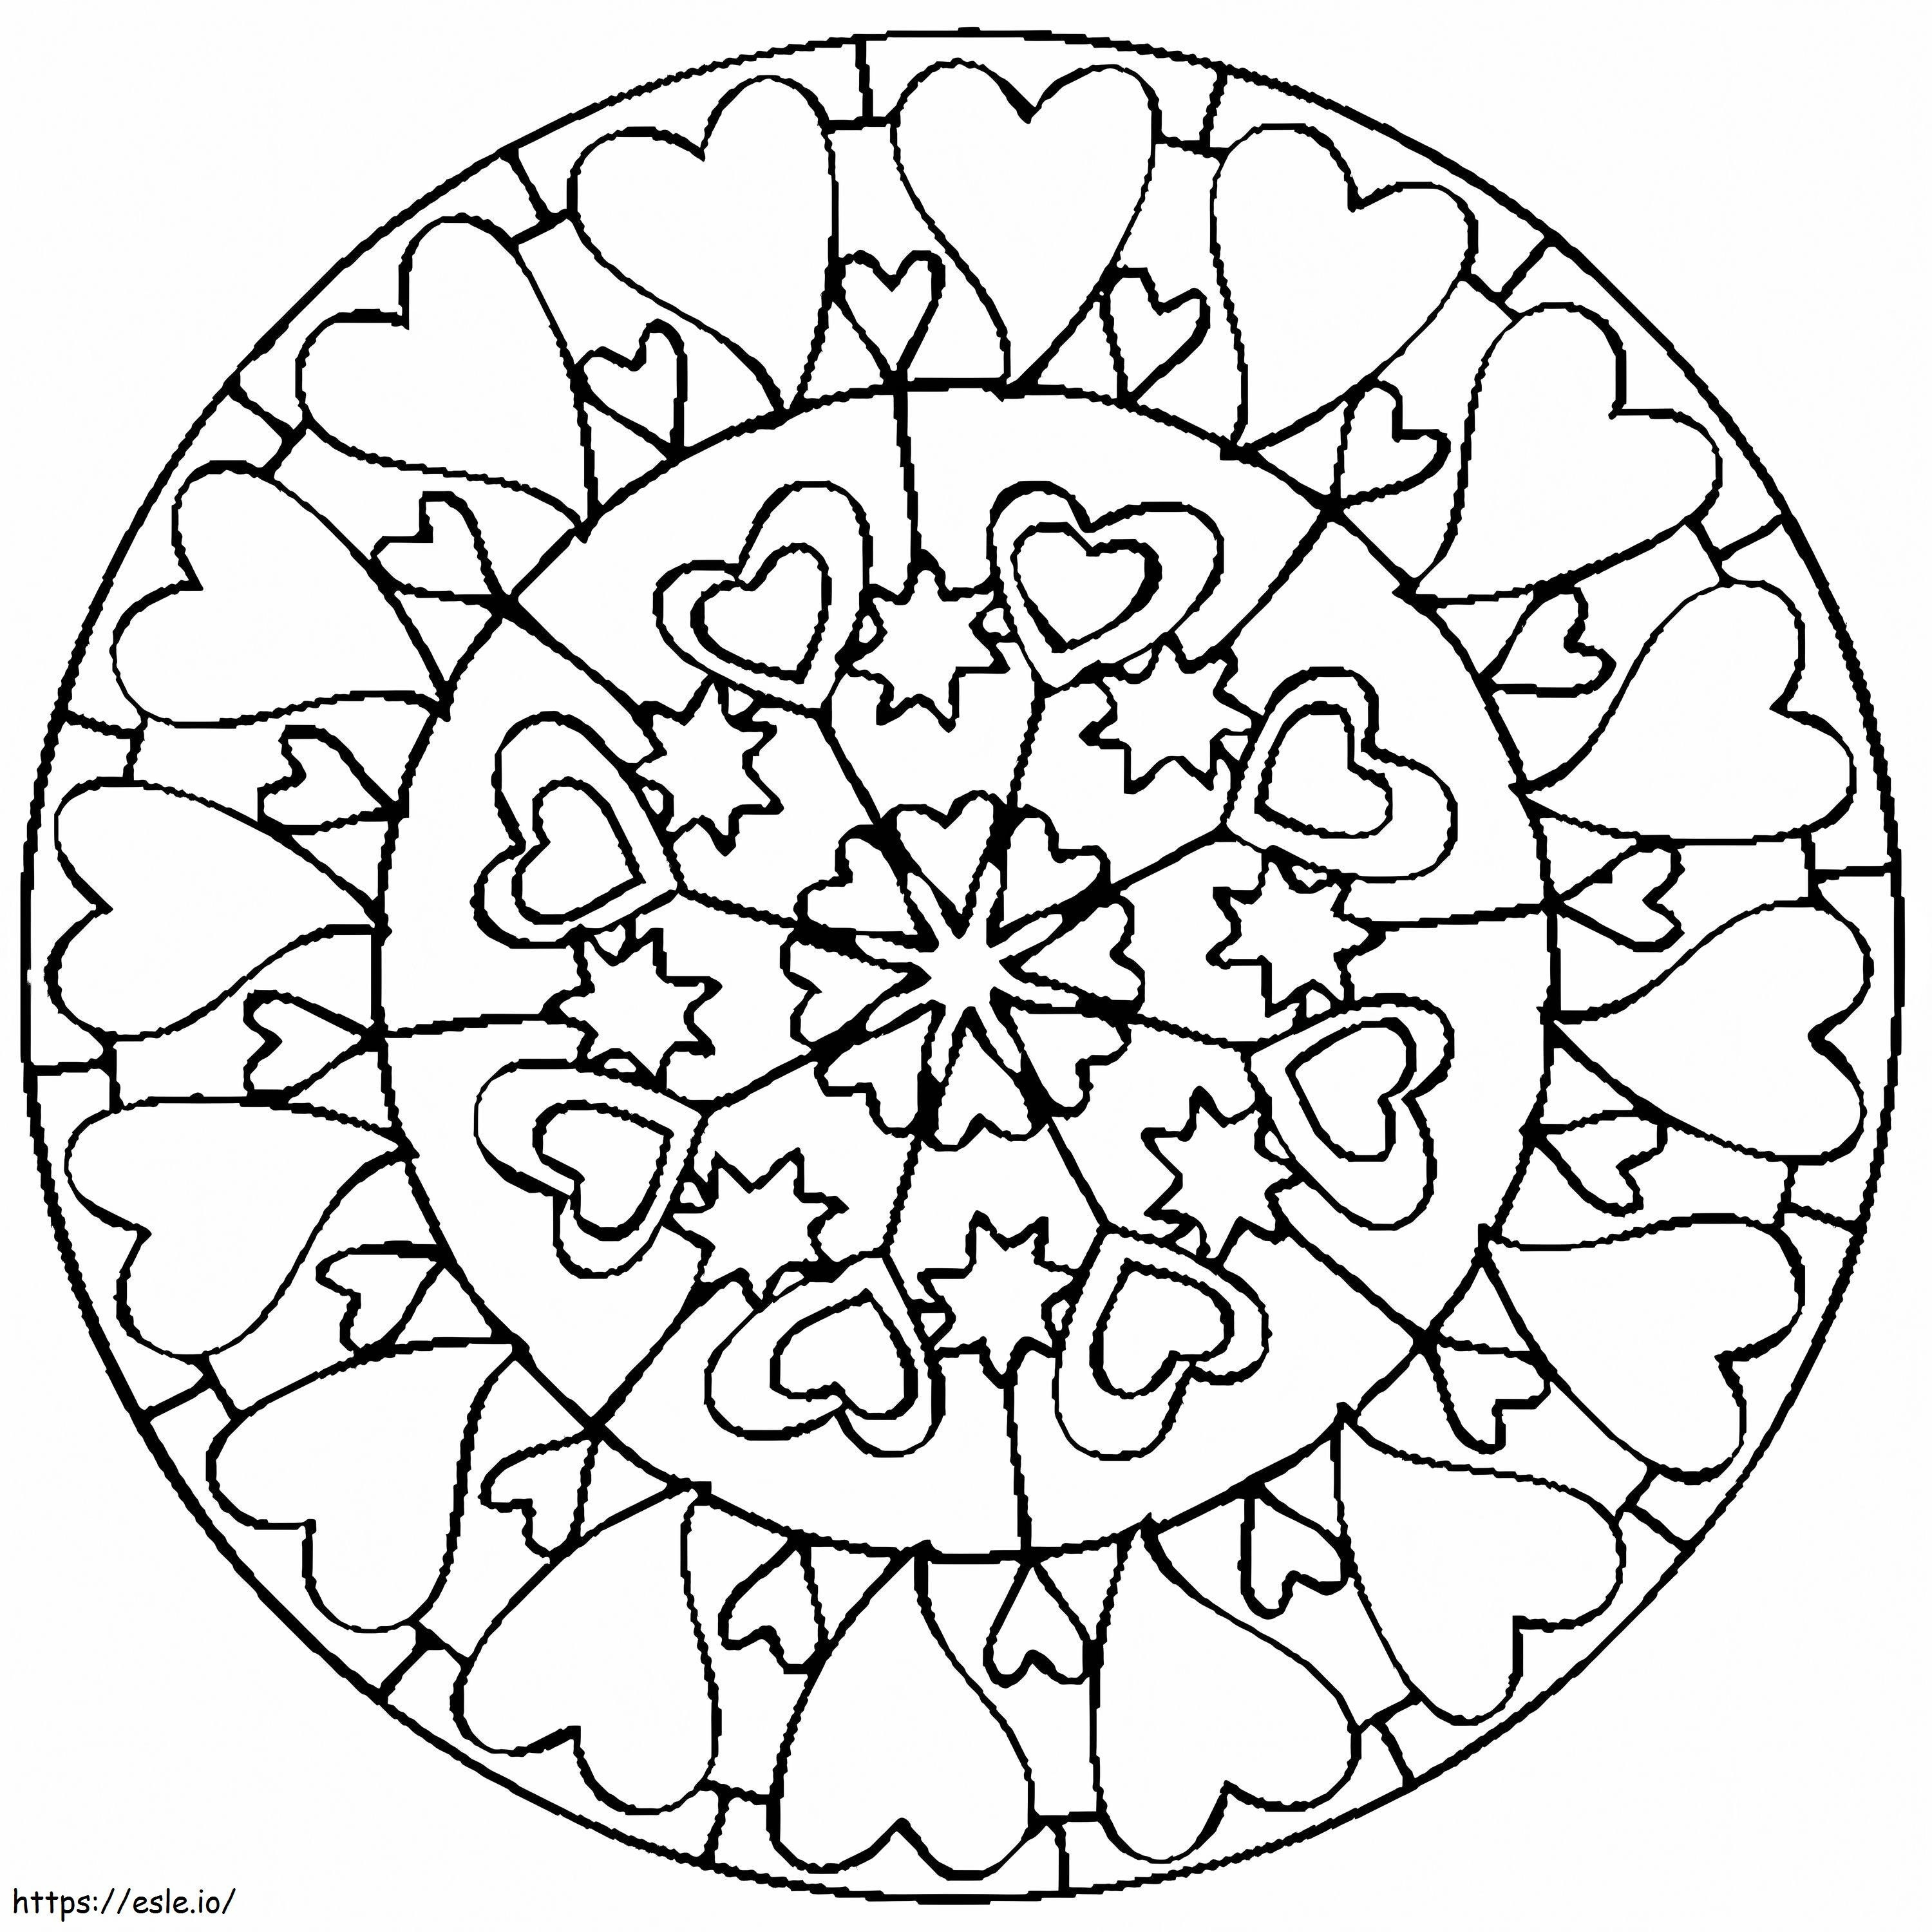 Simple Heart Mandala In Circle coloring page